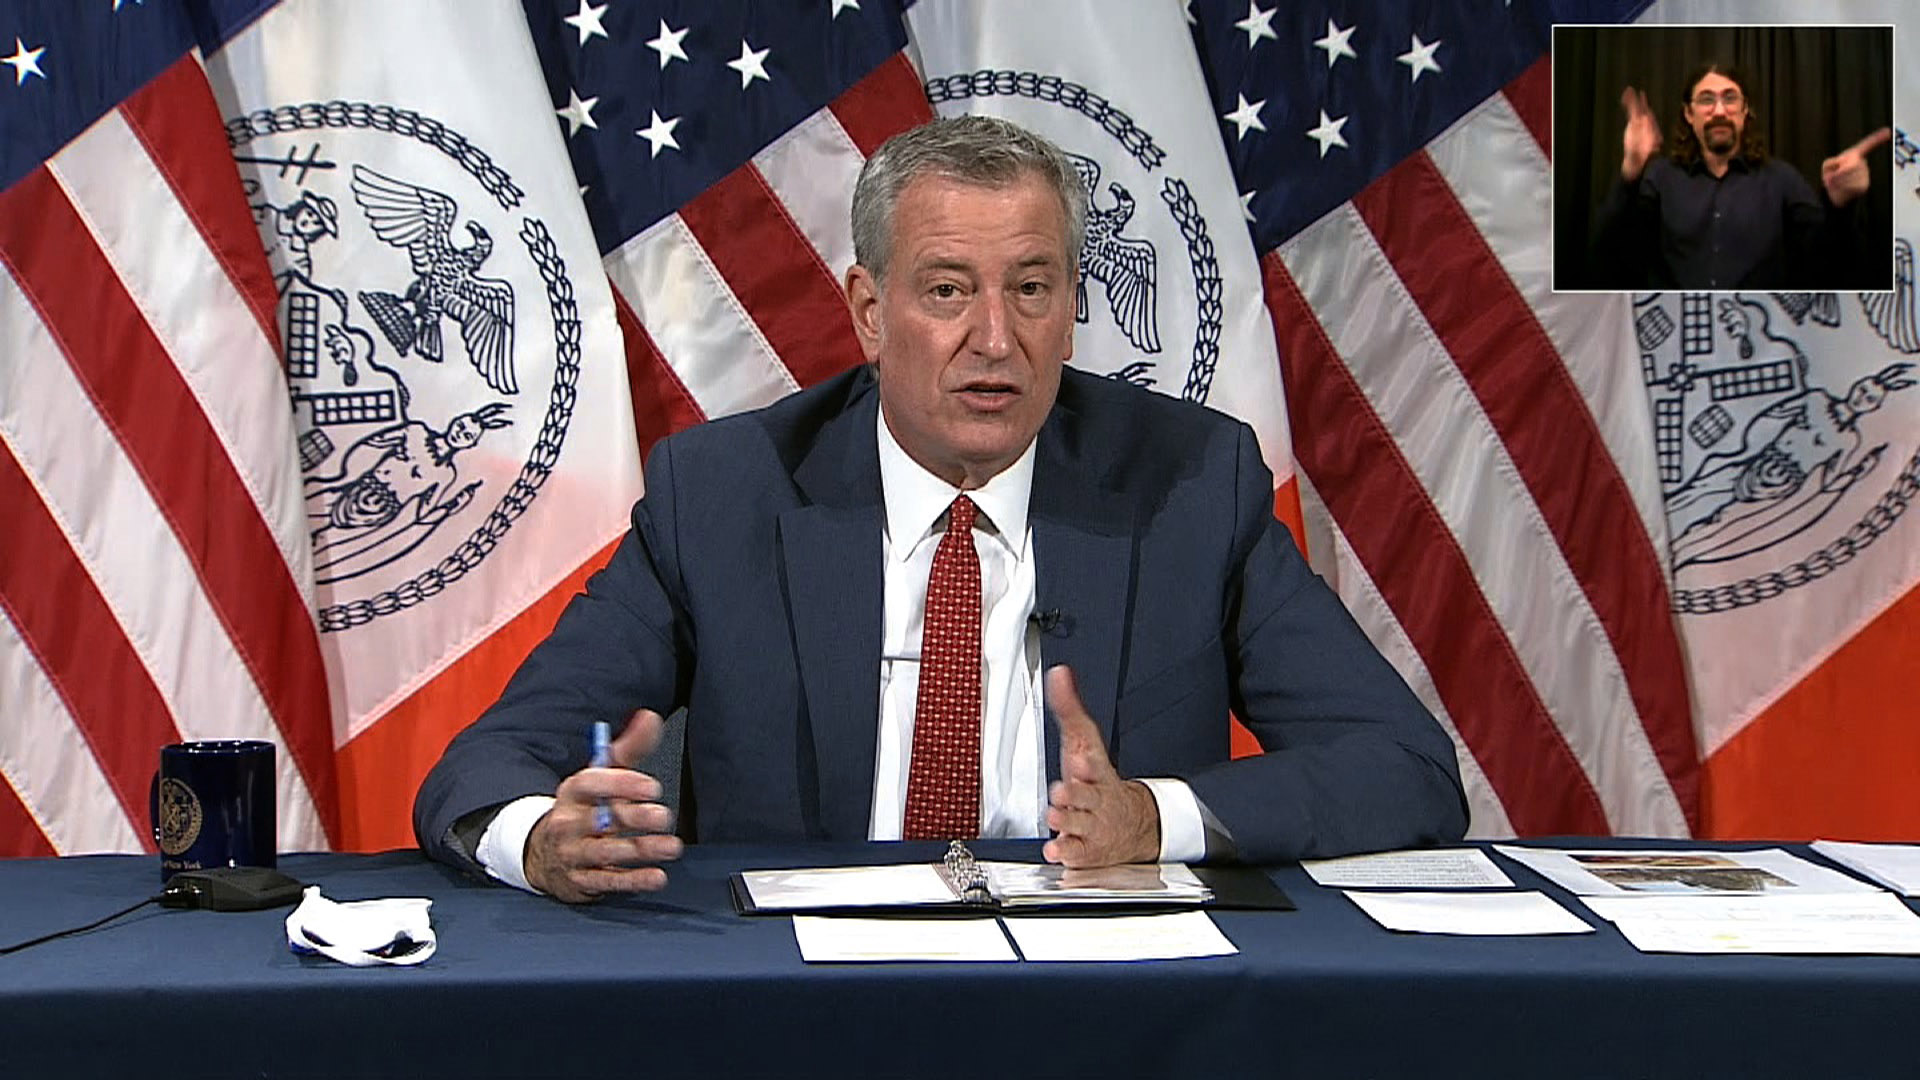 New York City Mayor Bill de Blasio speaks during a press conference in New York on November 19.